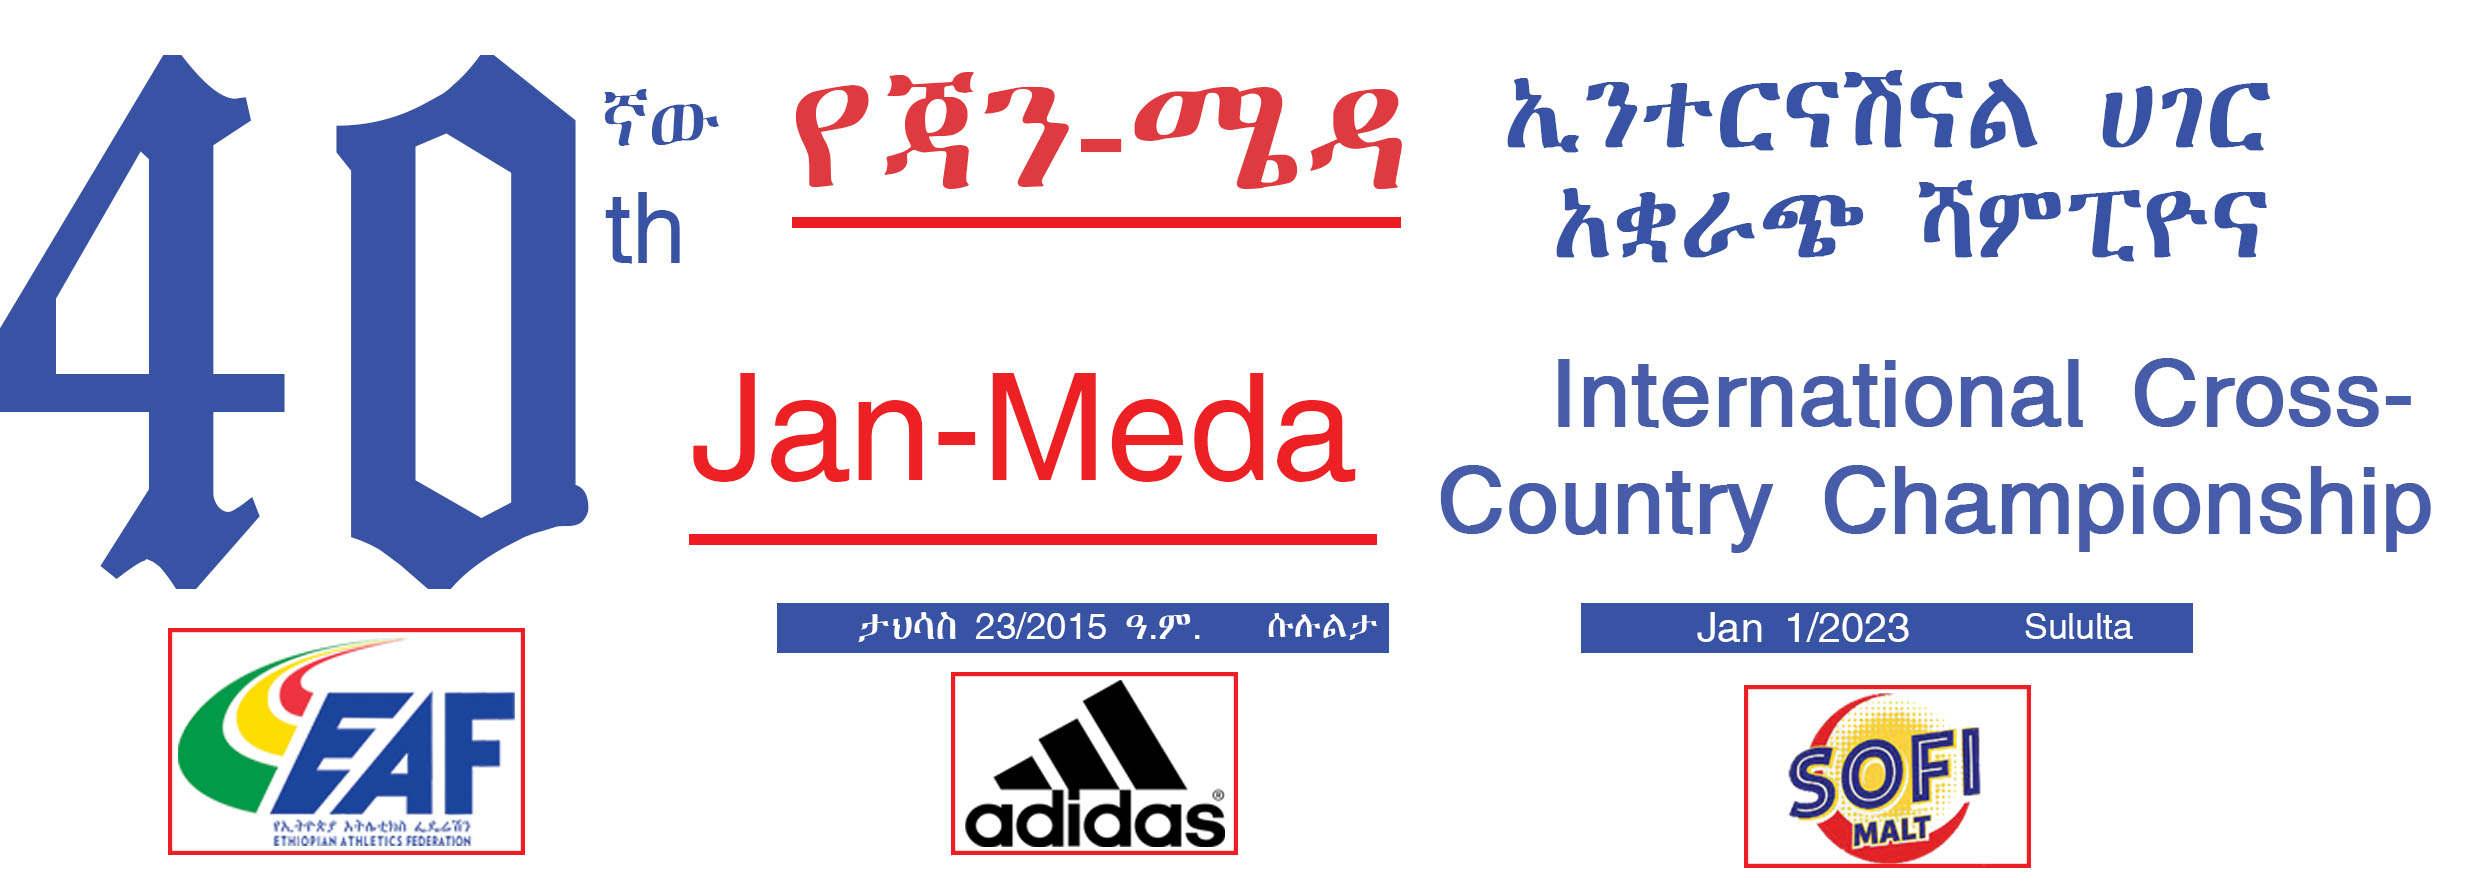 40th Jan Meda cross-country, Sululta (Ethiopia) 1/01/2023